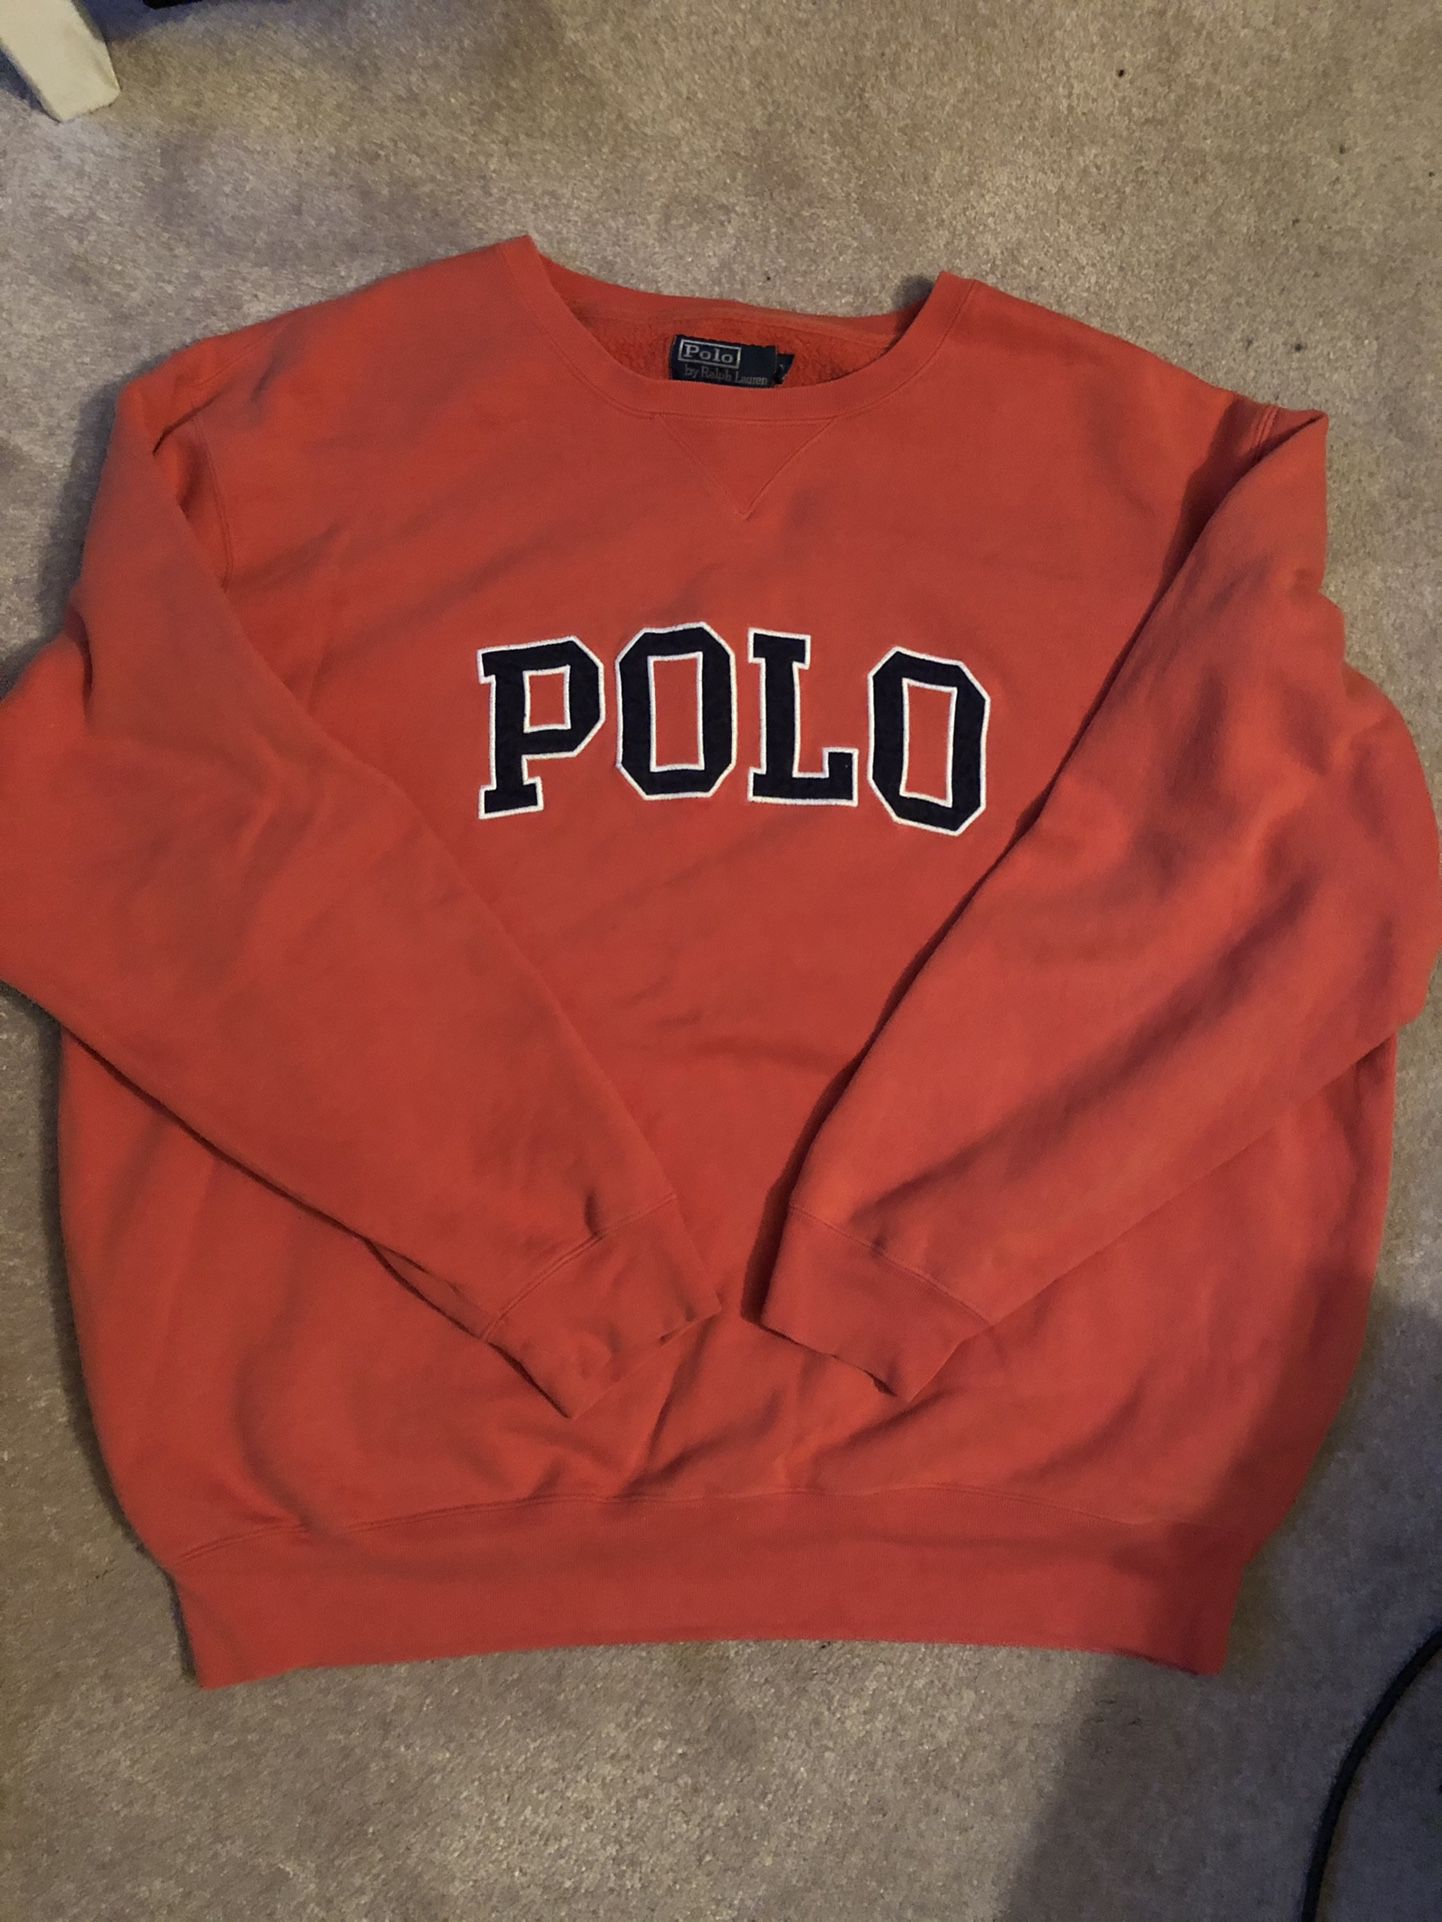 Men’s Polo Sweatshirt 